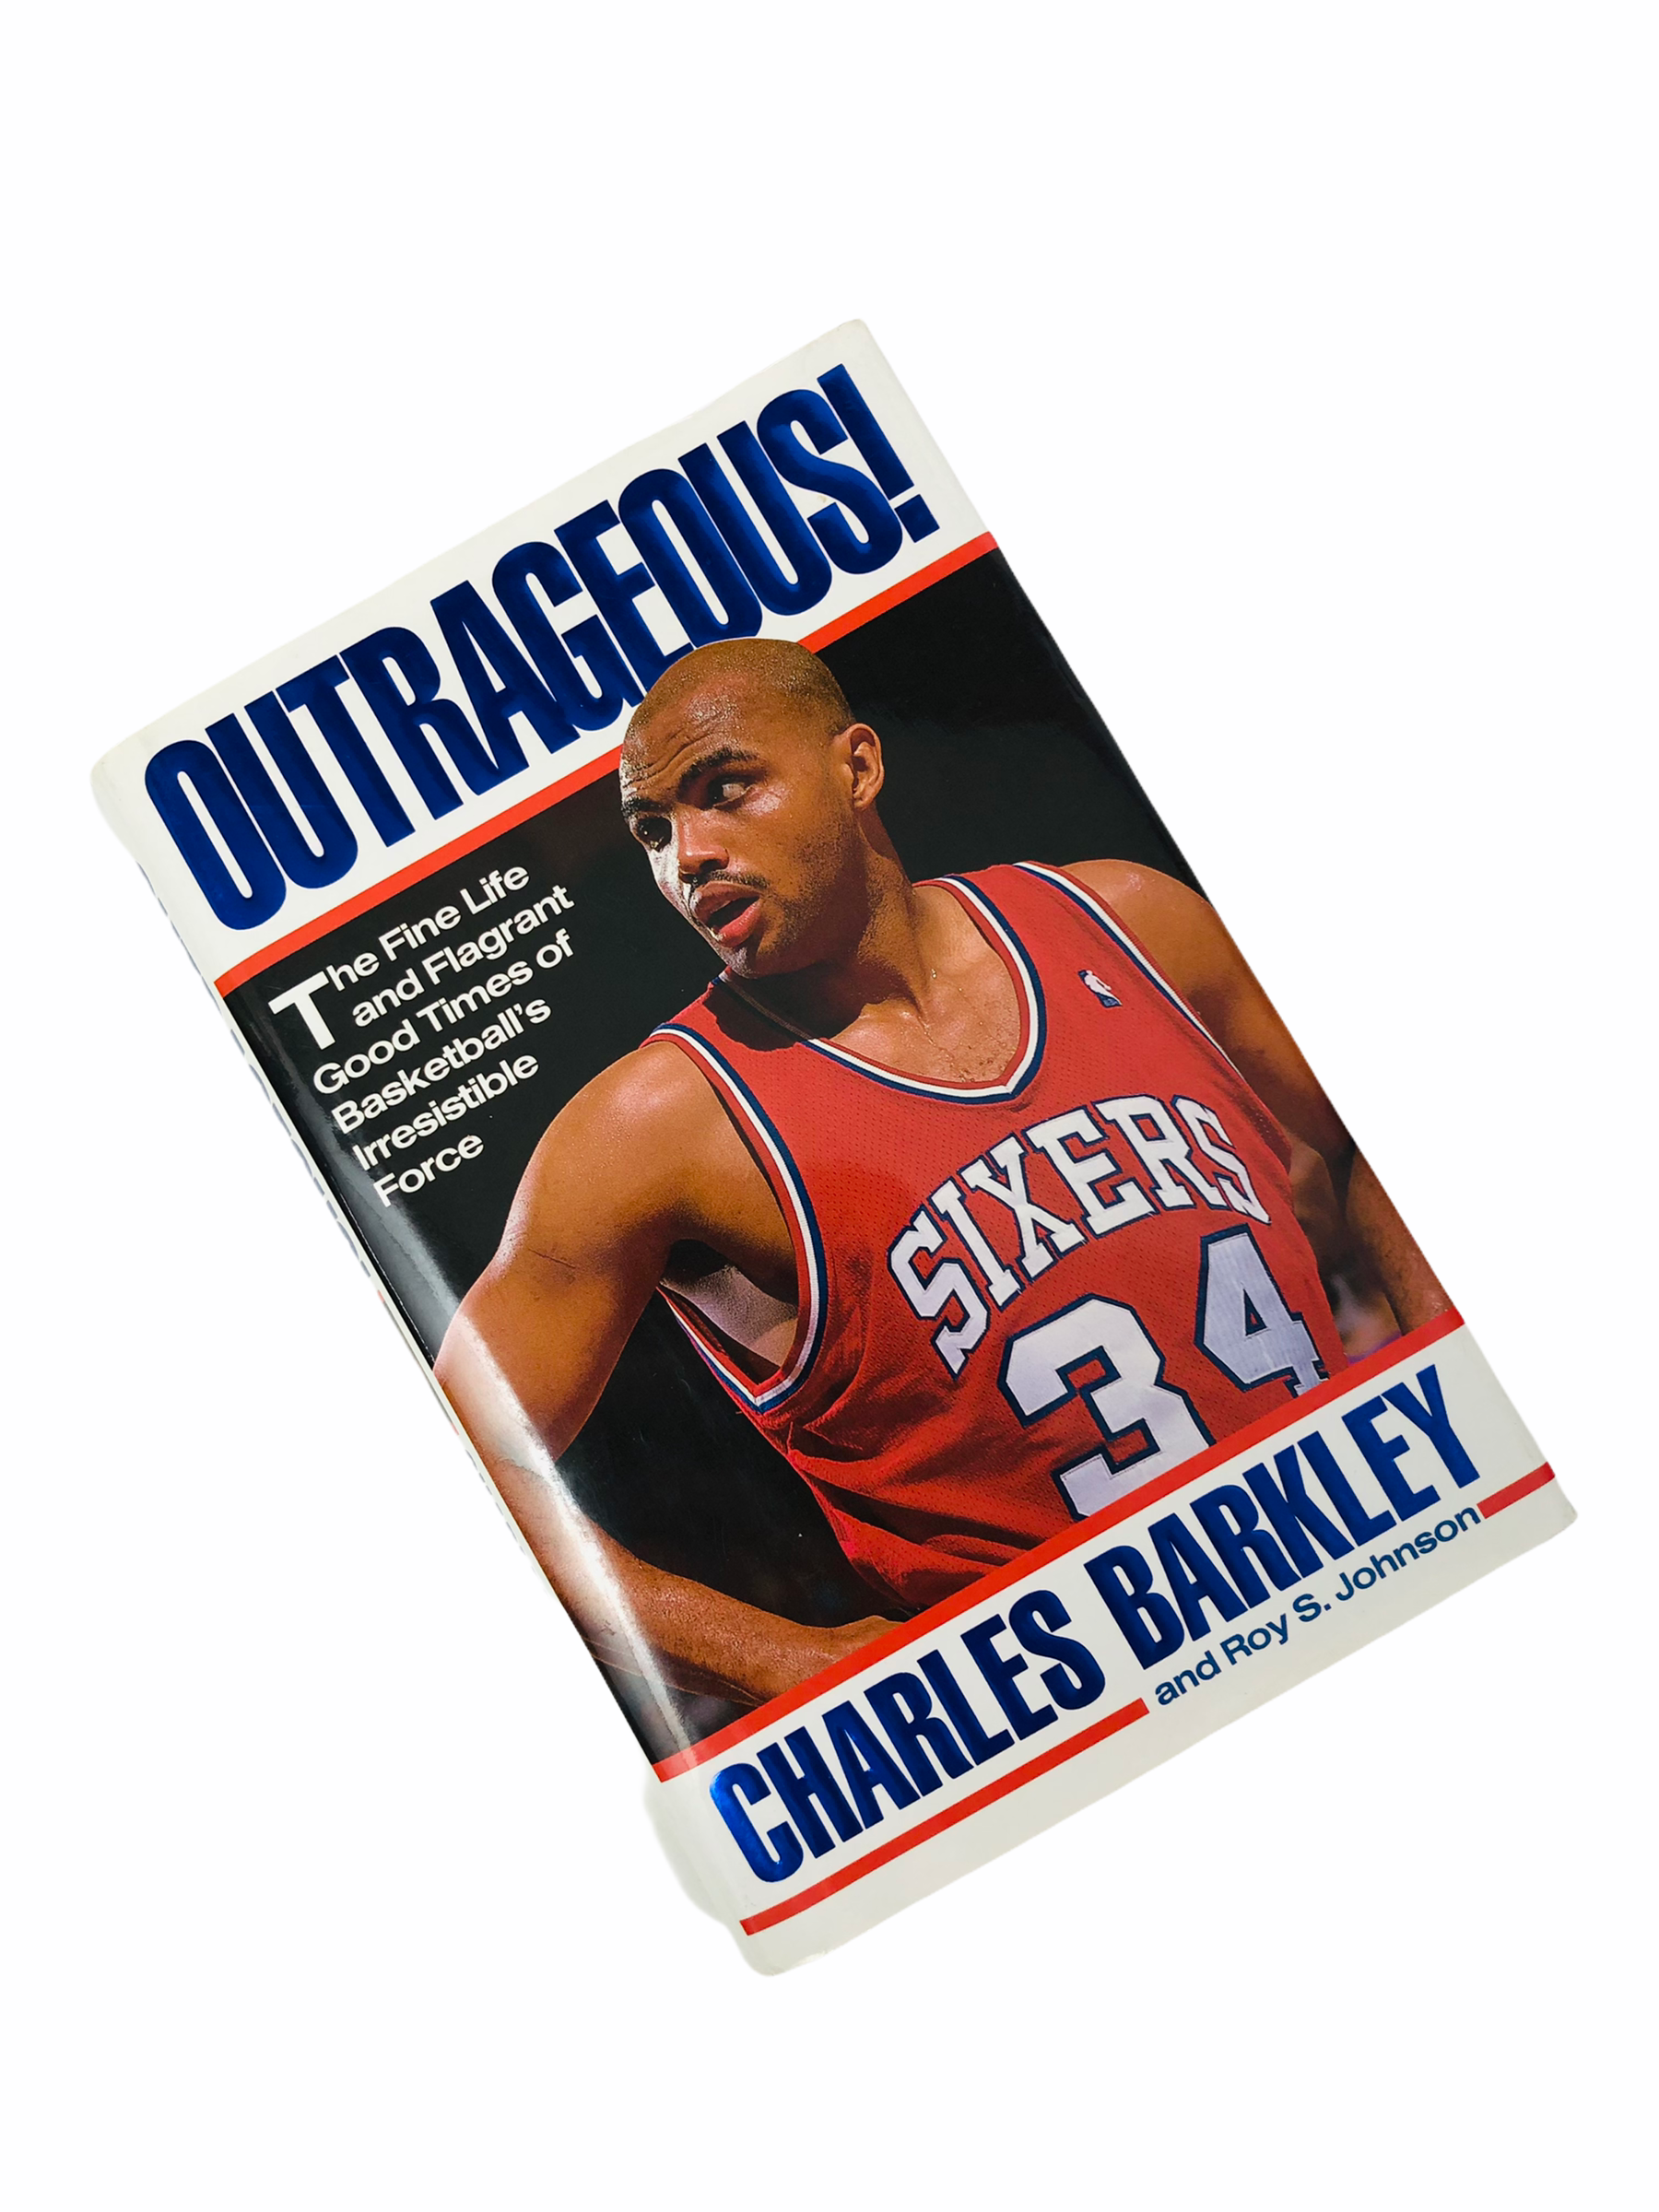 Charles Barkley Philadelphia 76ers NBA Jerseys for sale